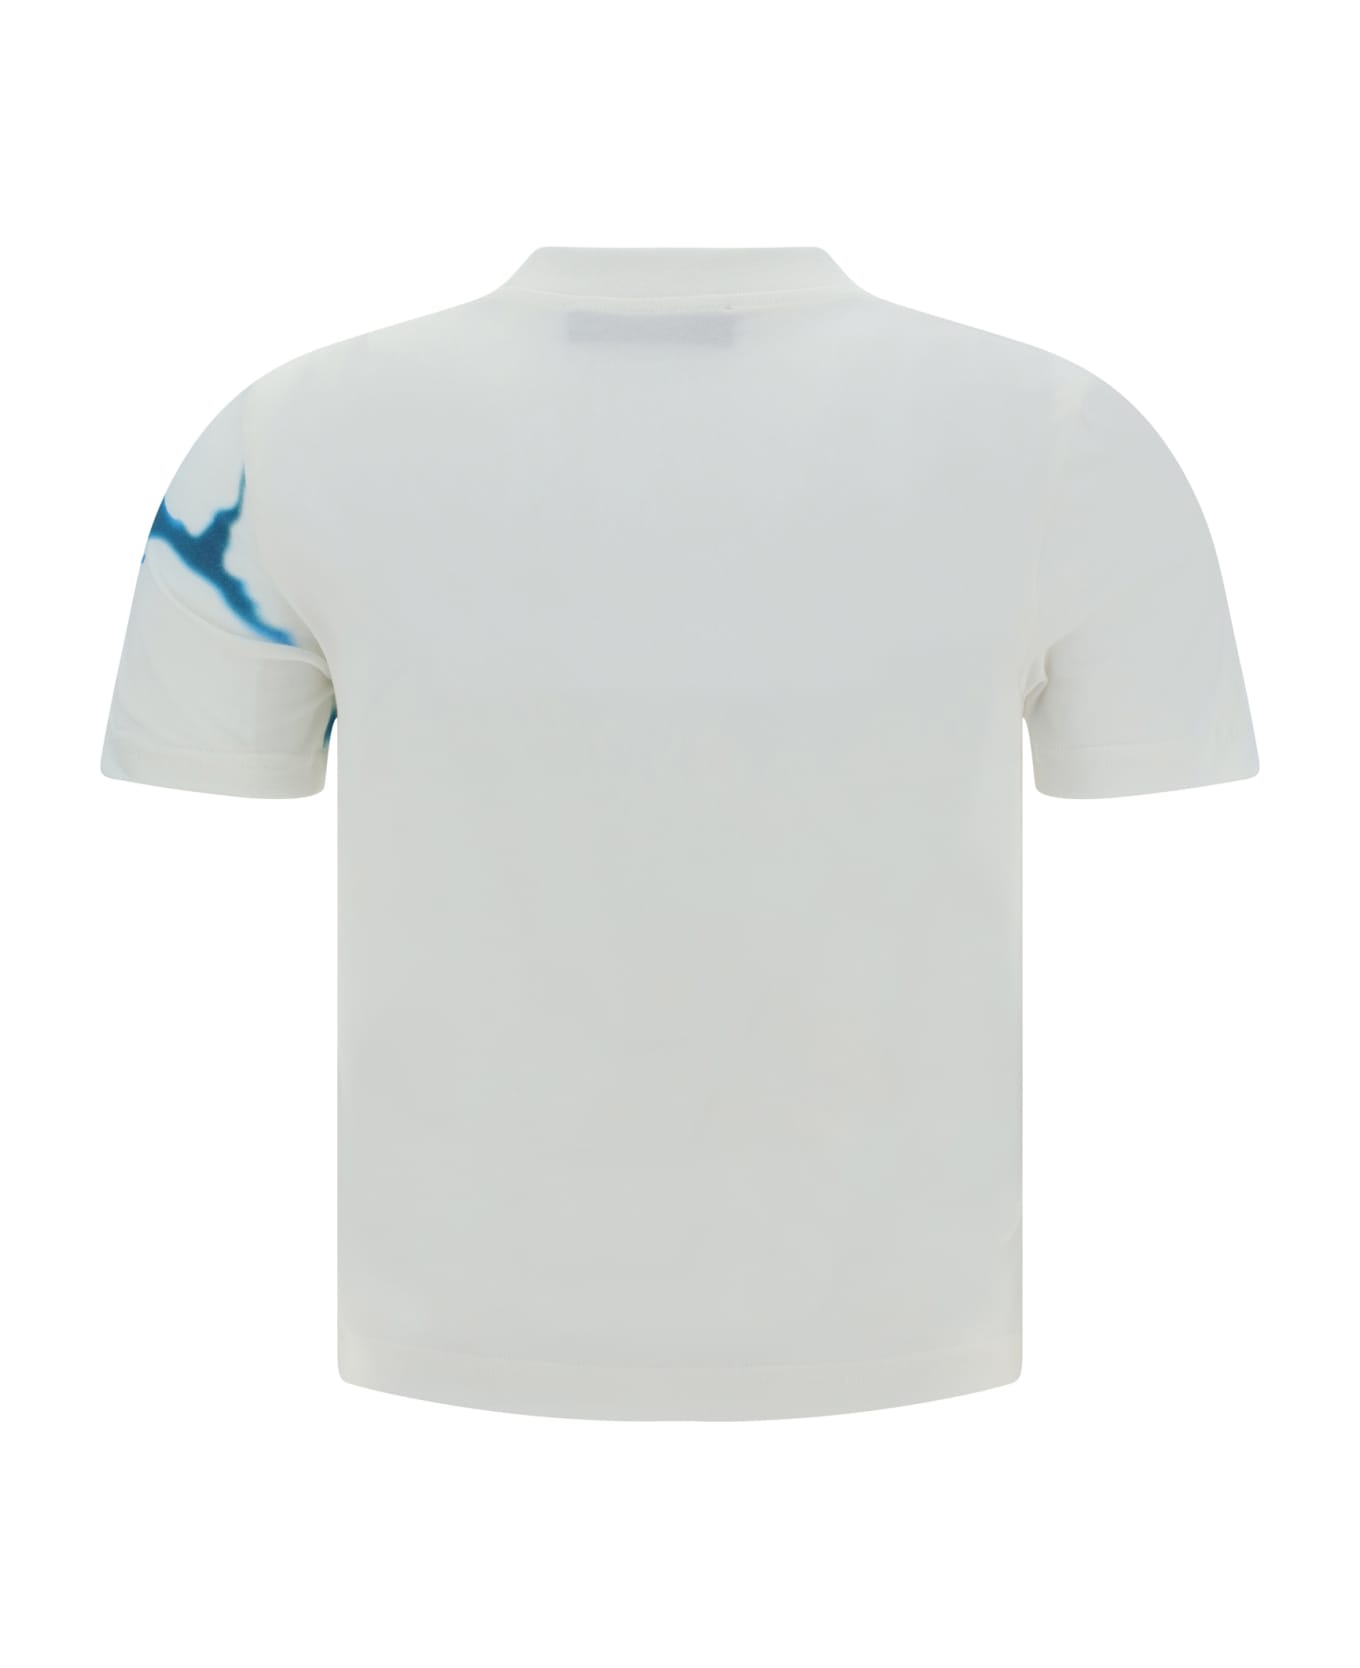 Maccapani T-shirt - White